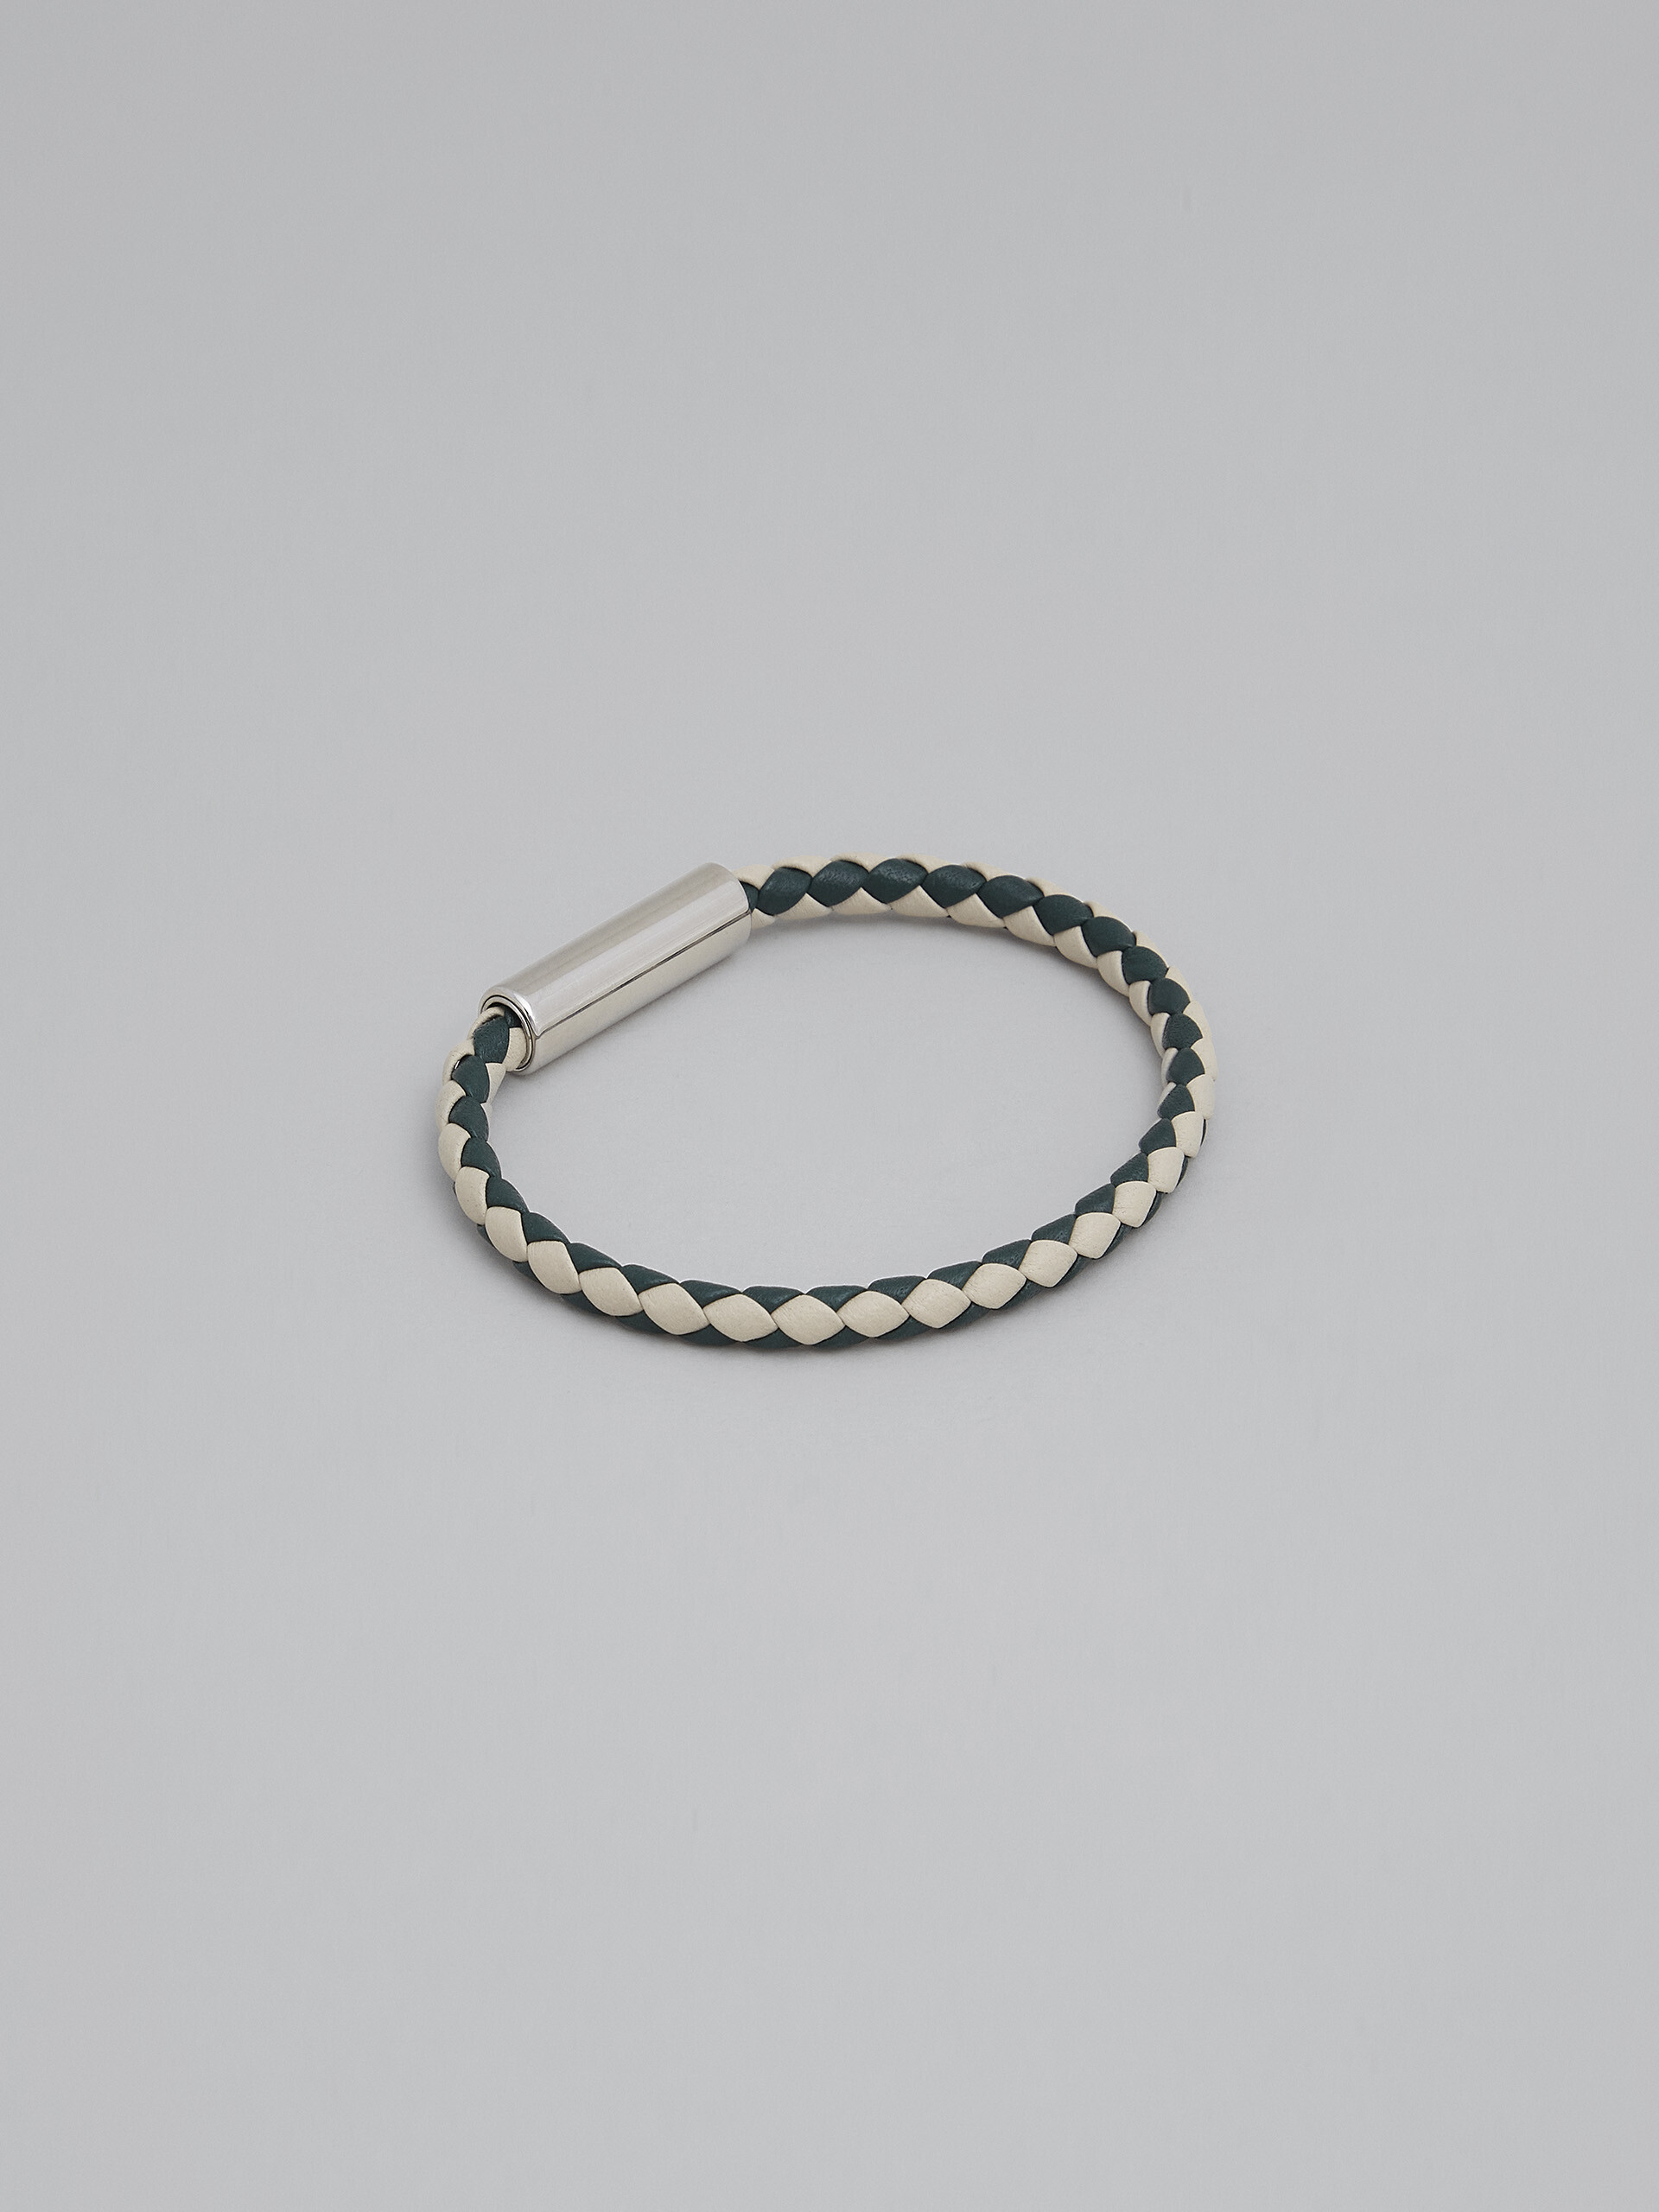 White and green braided leather bracelet - Bracelets - Image 3